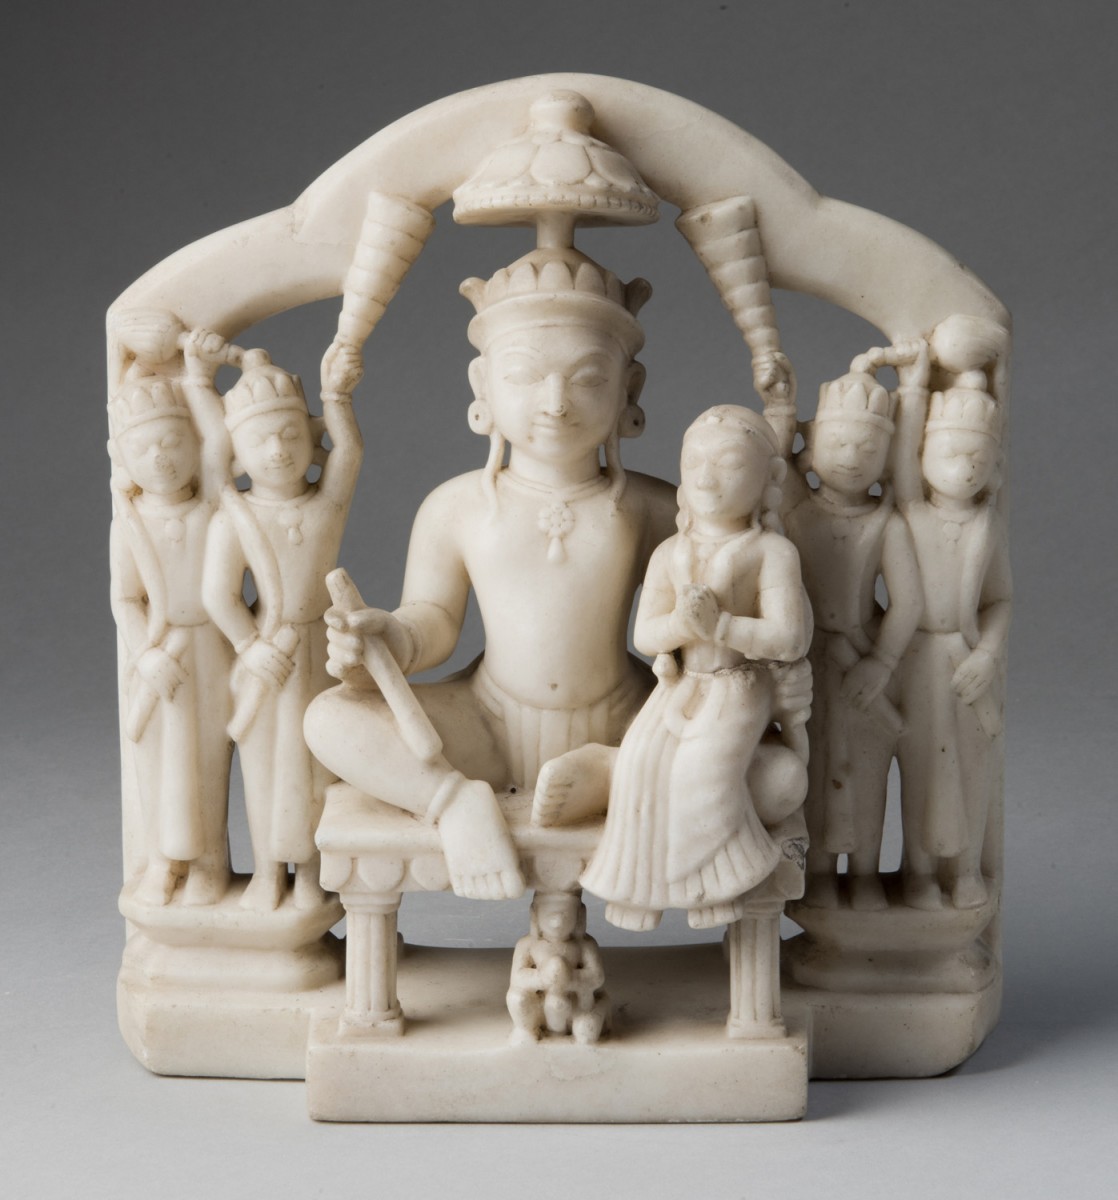 Rama and Sita, with Hanuman and Attendants